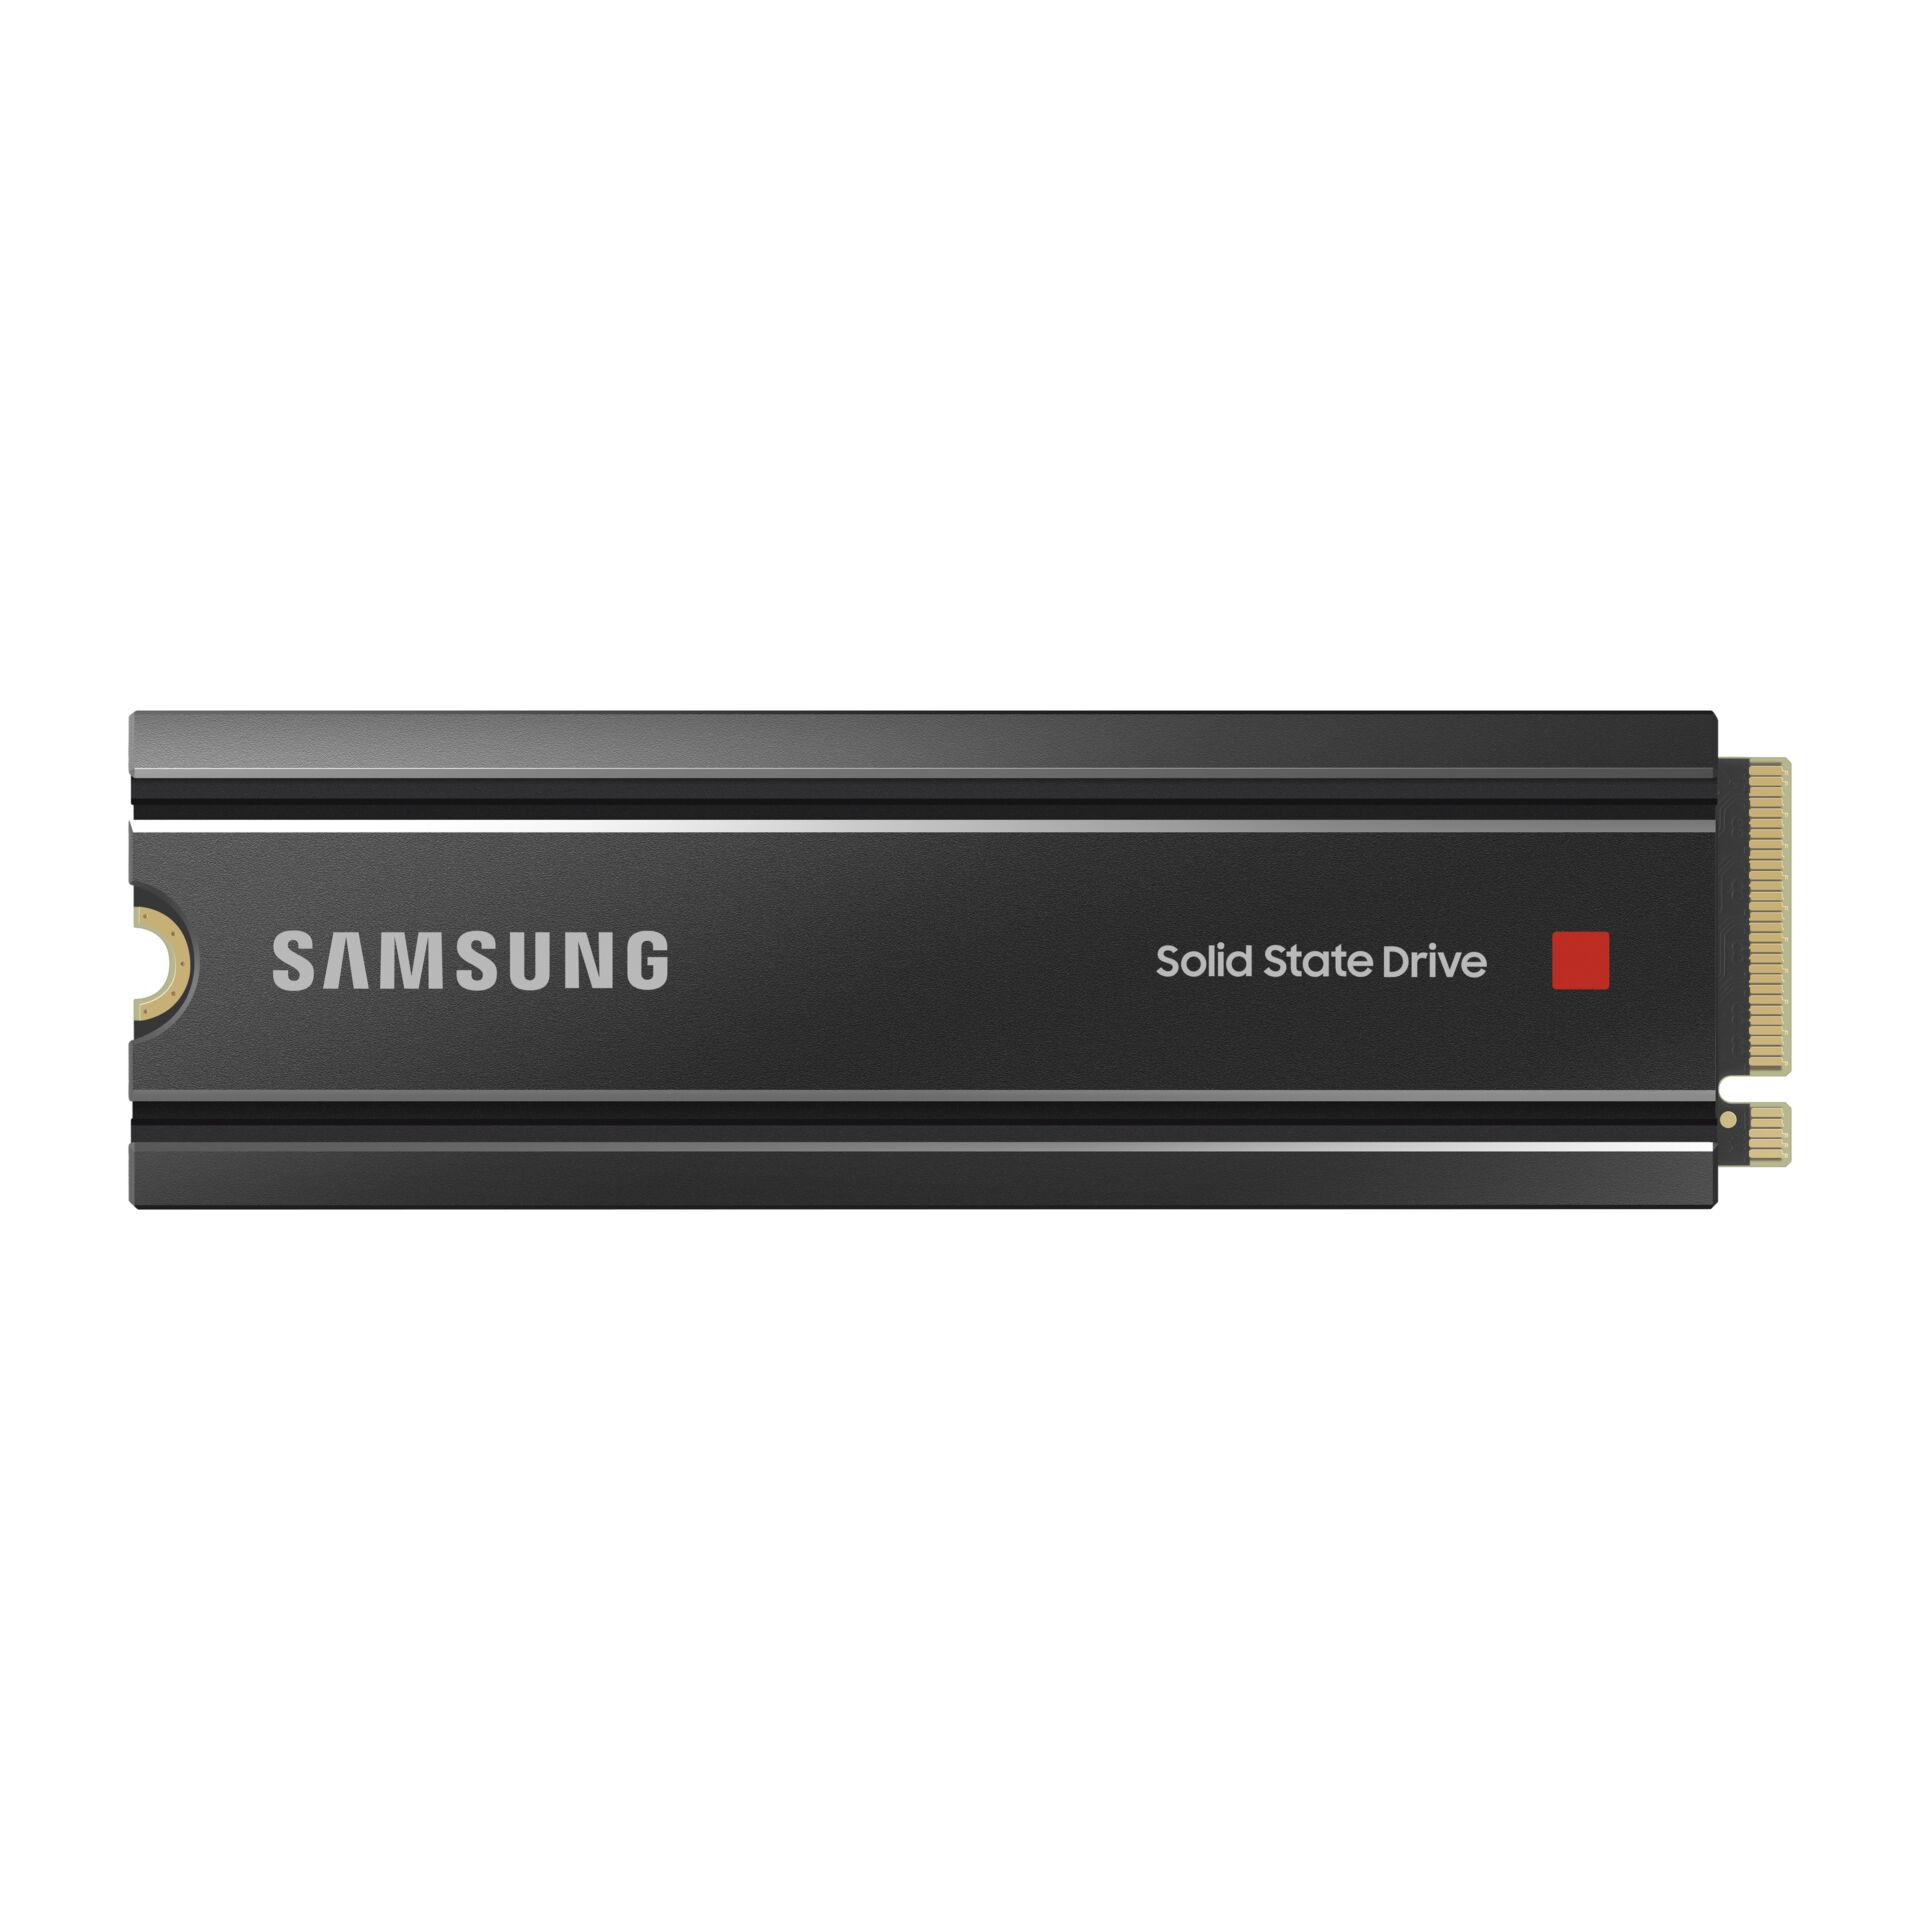 2.0 TB SSD Samsung SSD 980 PRO, M.2/M-Key (PCIe 4.0 x4), lesen: 7000MB/s, schreiben: 5100MB/s, TBW: 1.3PB